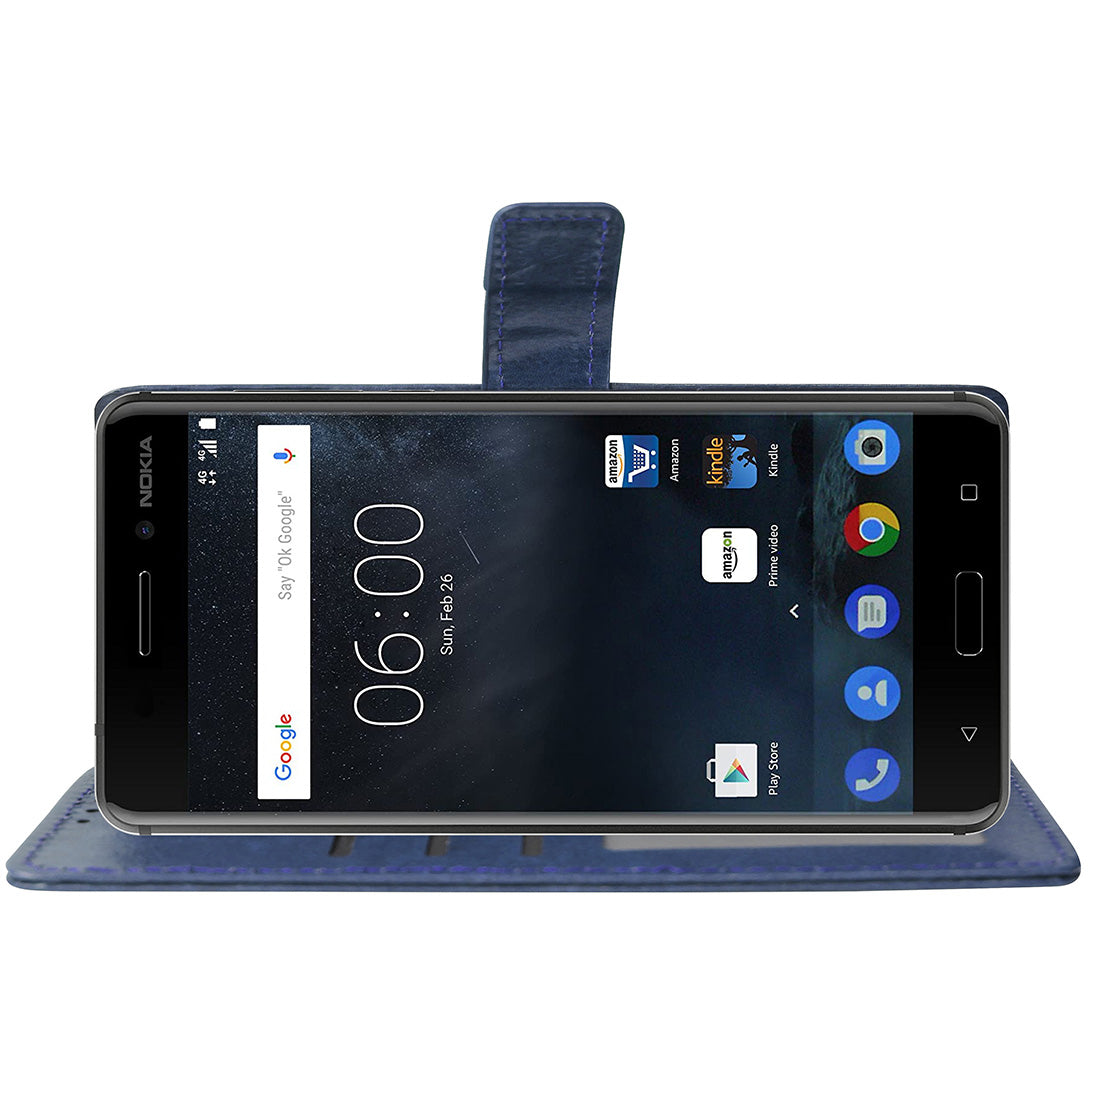 Premium Wallet Flip Cover for Nokia 6